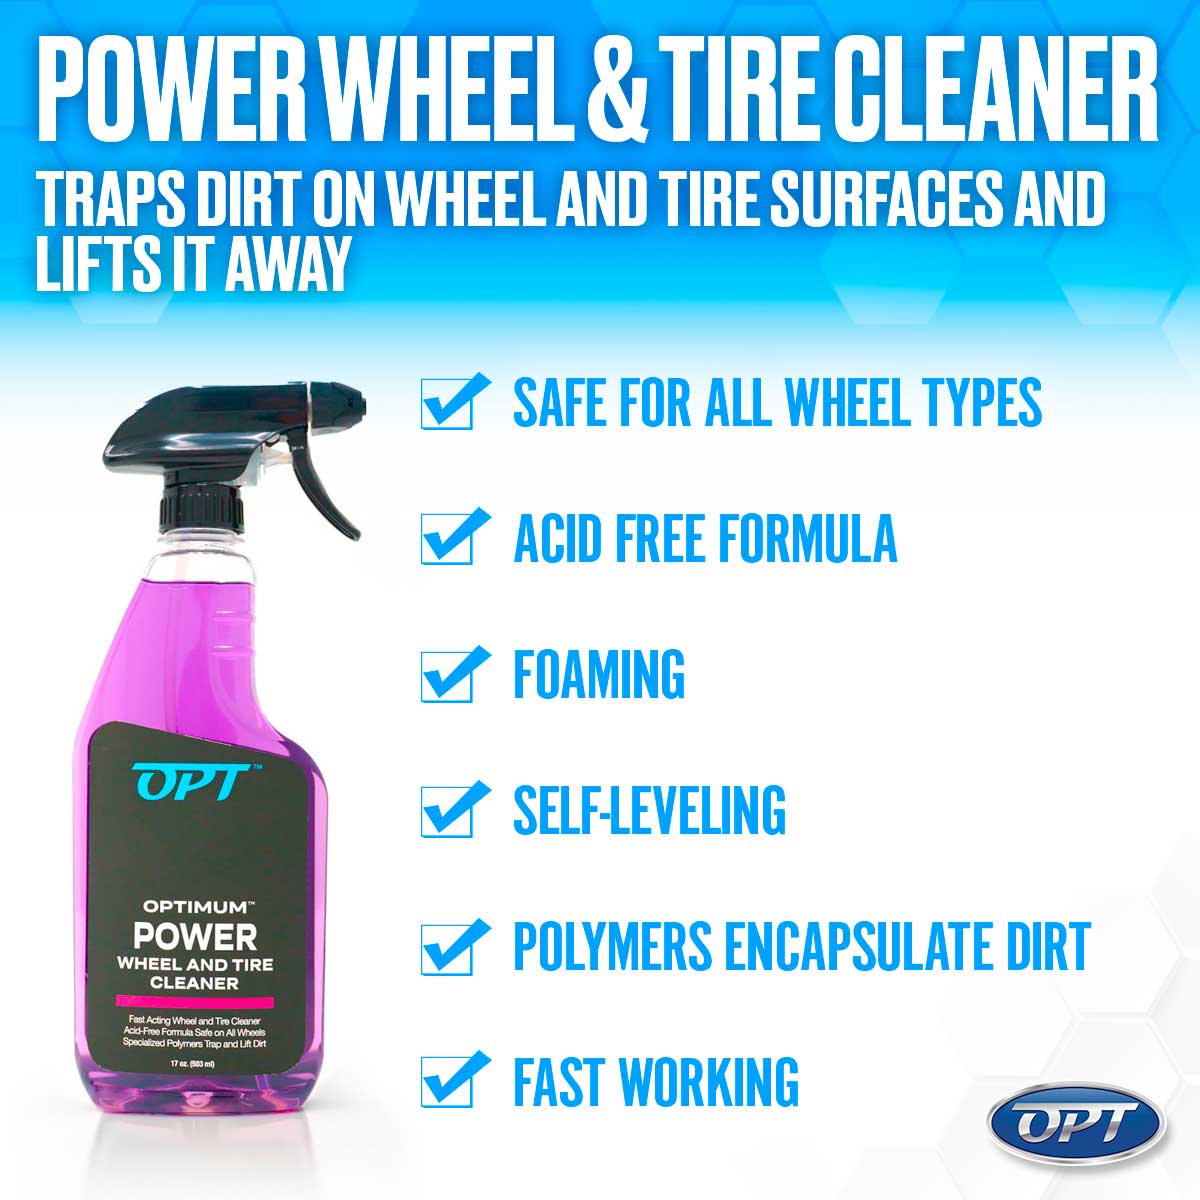 Foaming Wheel & Tire Cleaner